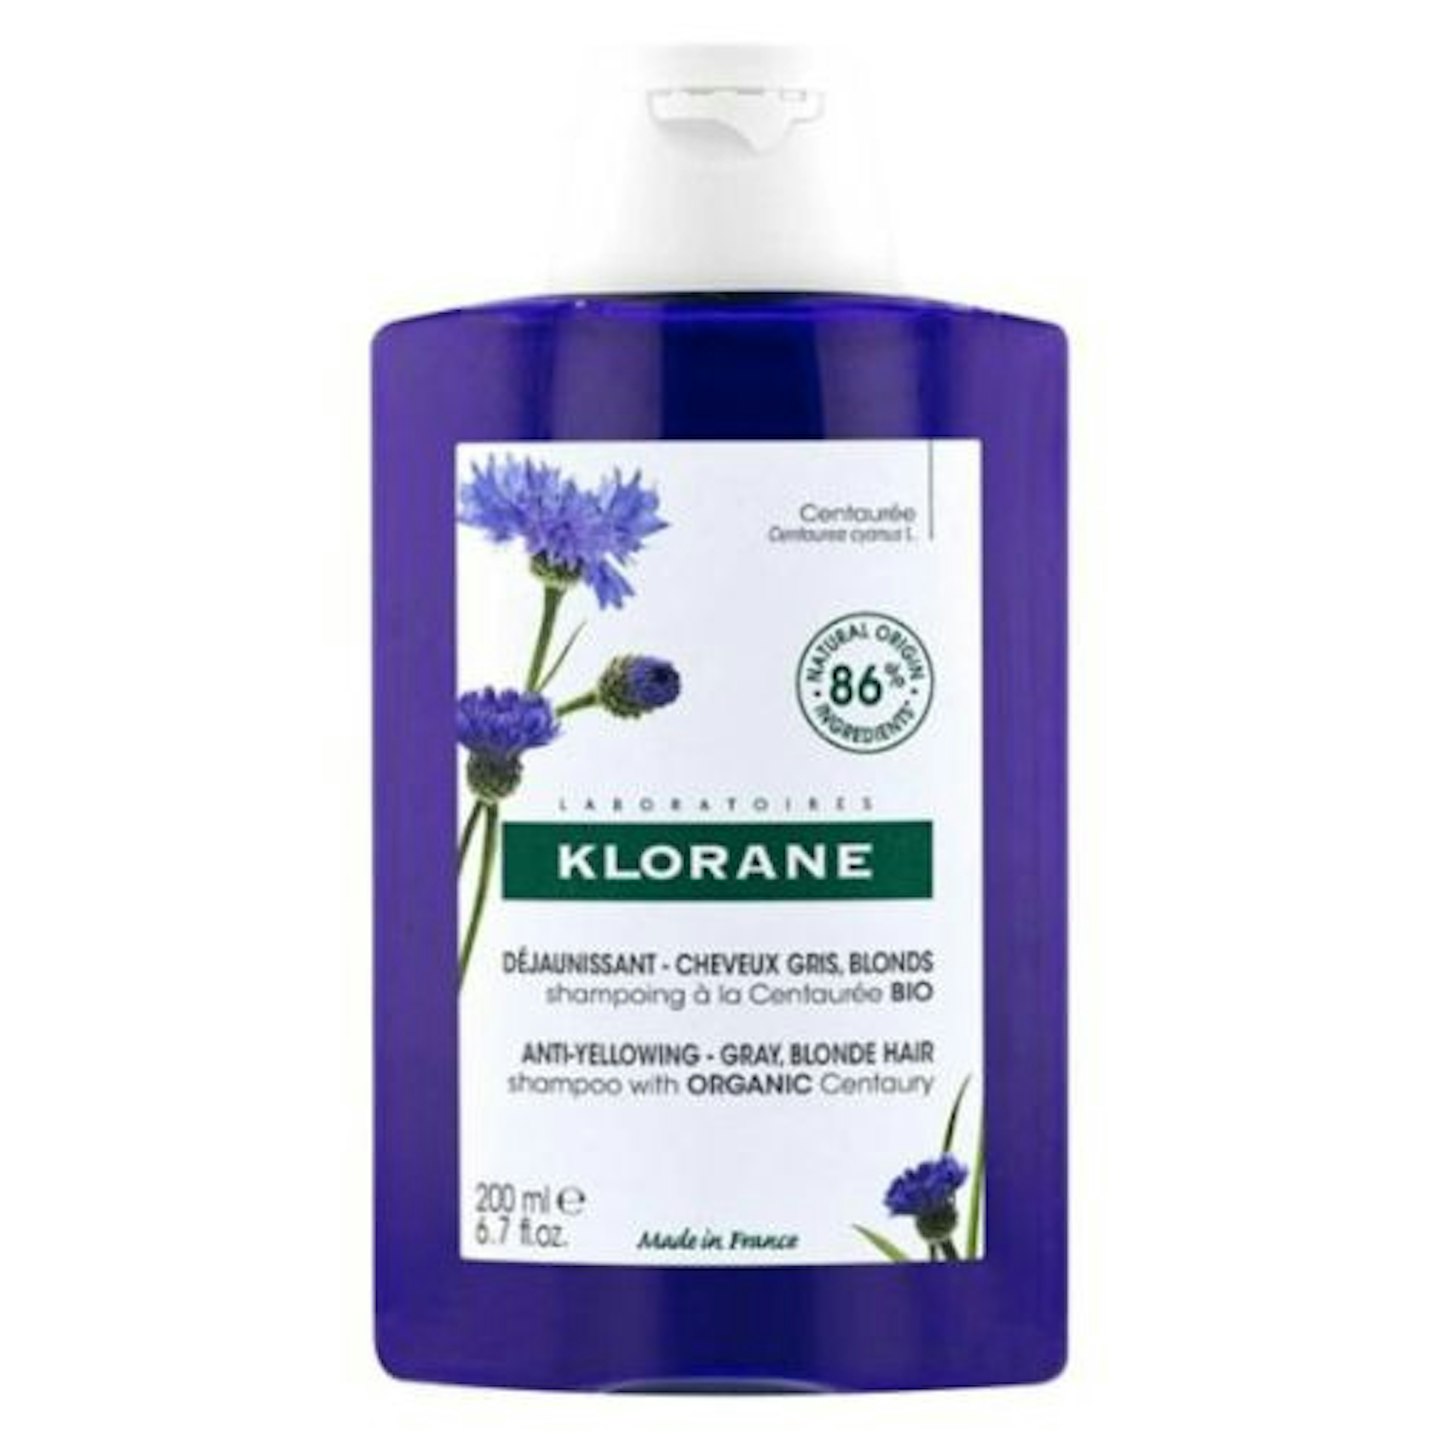 Klorane Anti-yellowing Shampoo with Organic Centaury for White and Grey Hair